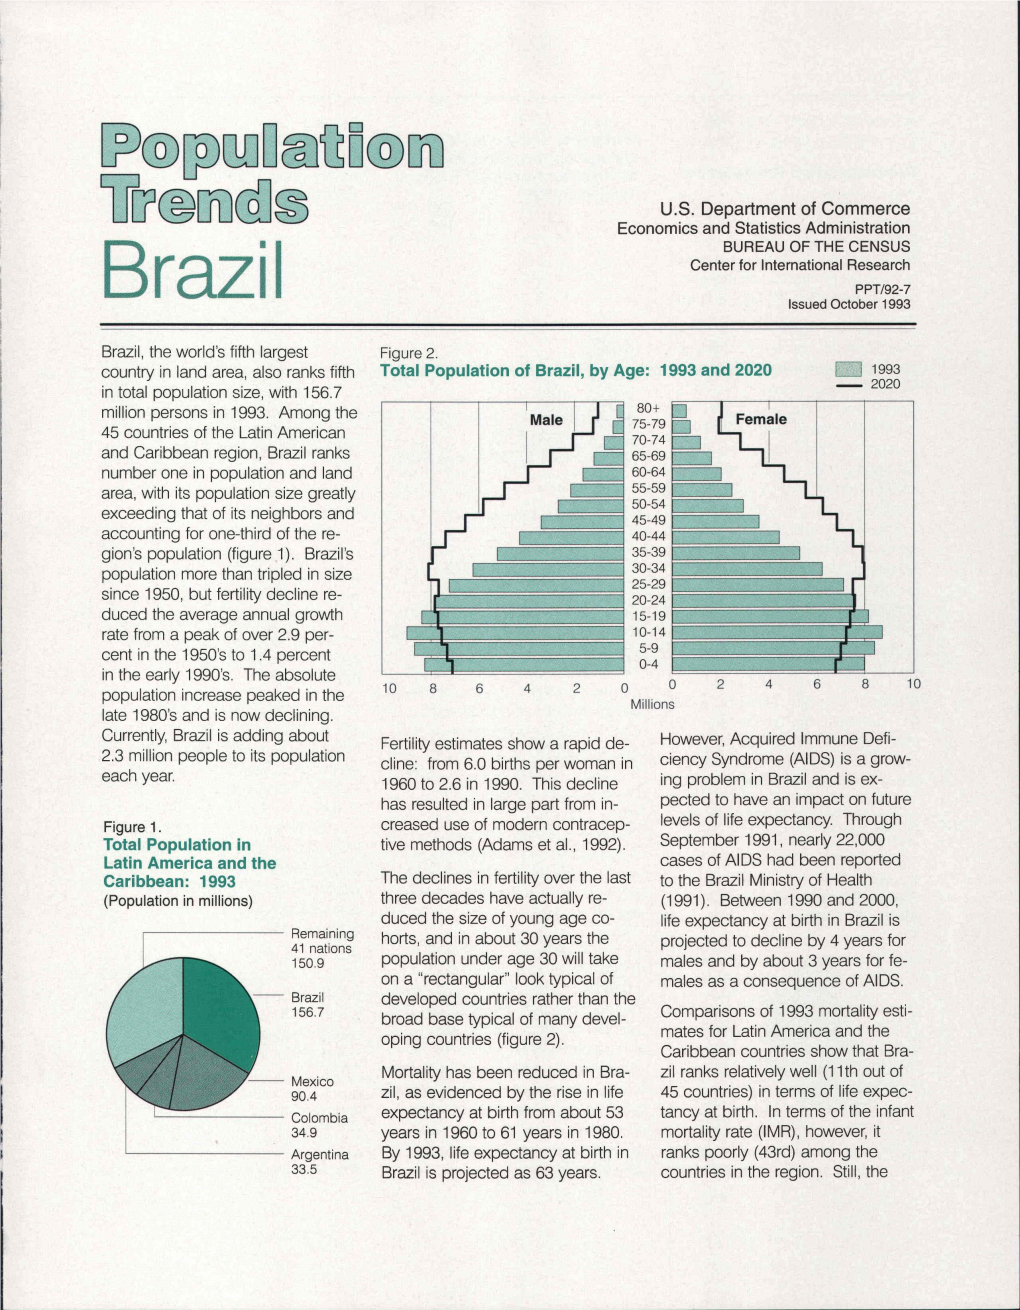 Brazil Issued October 1993